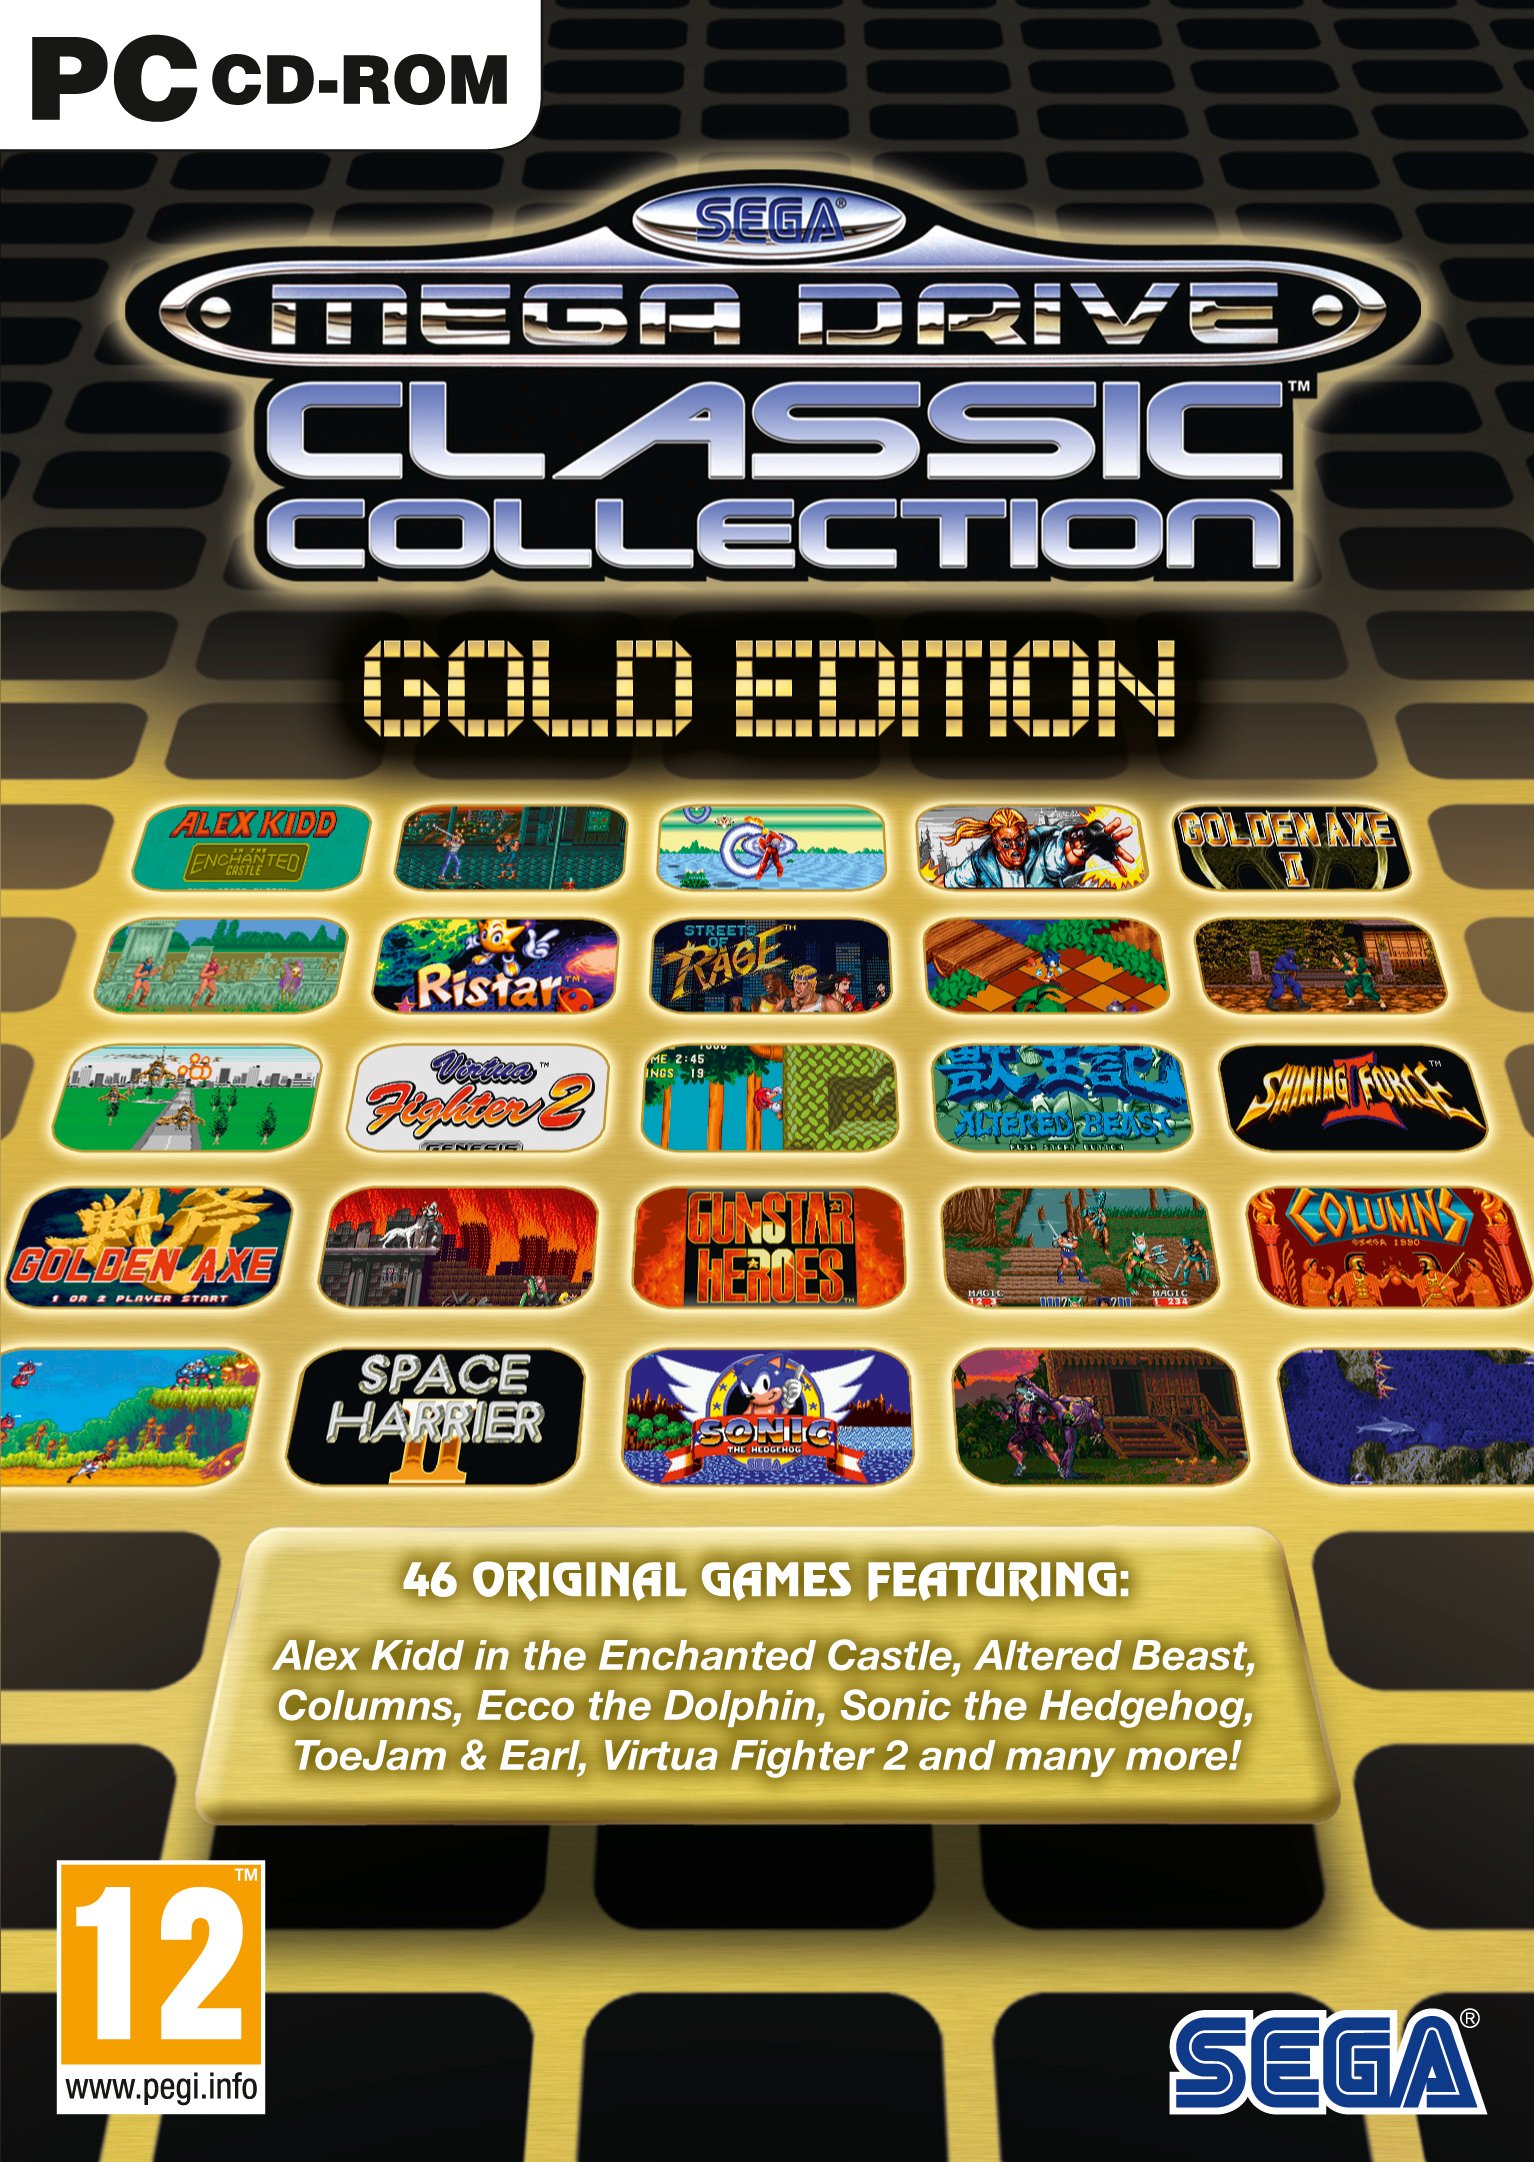 free download sega classics collection